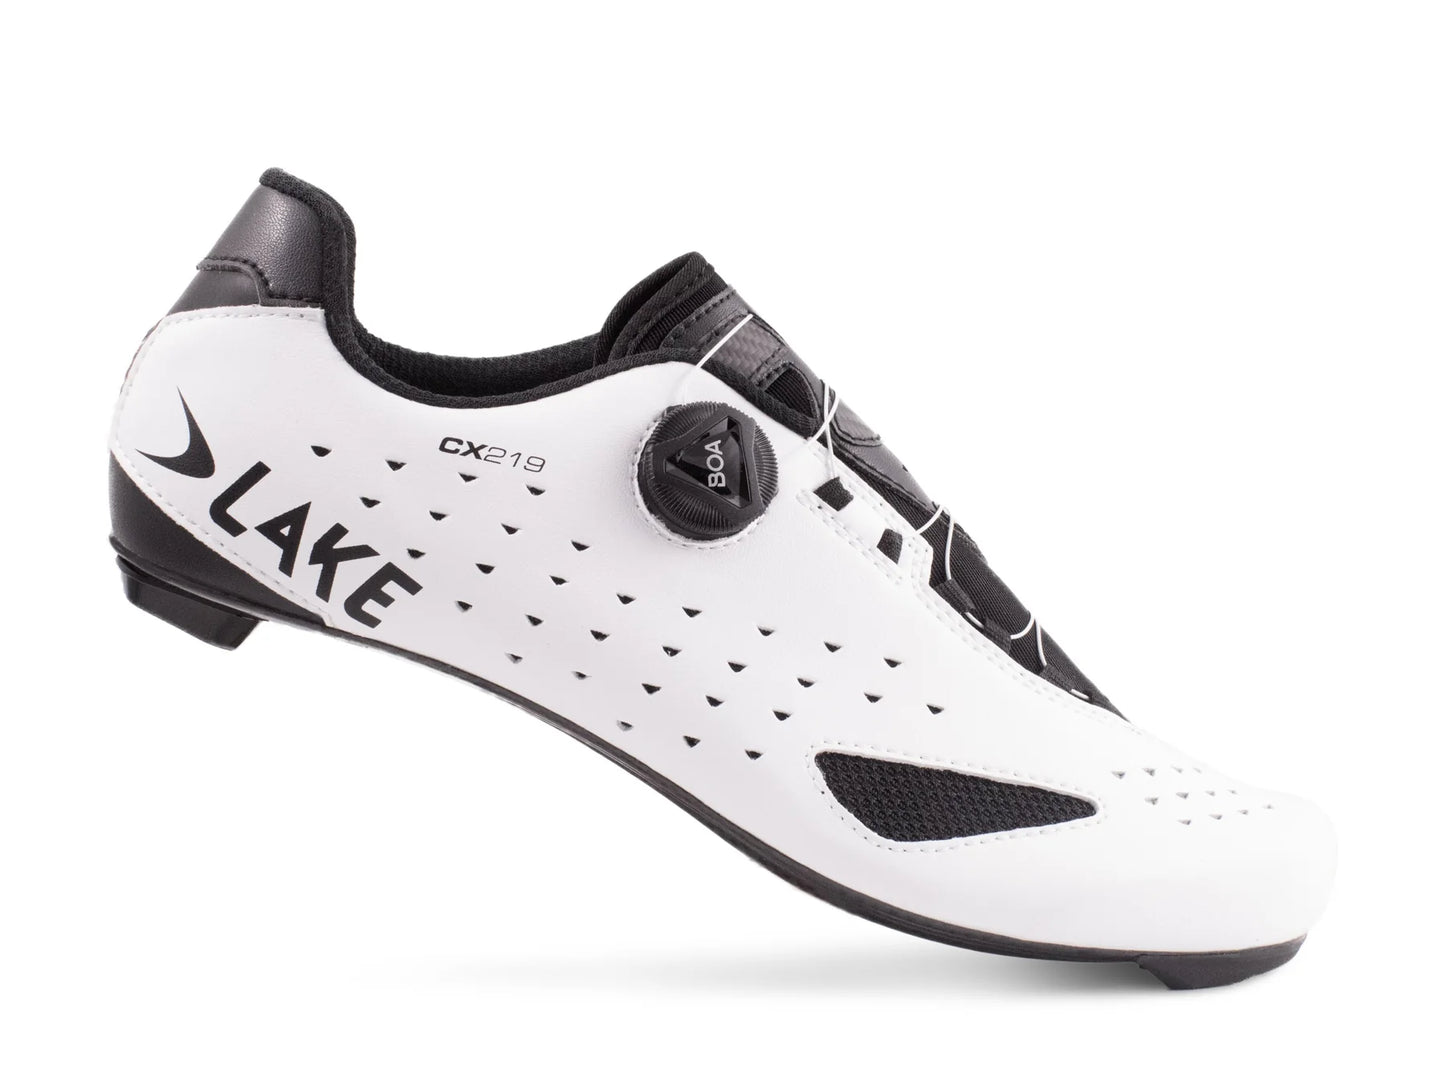 Lake CX219 Road Cycling Shoes